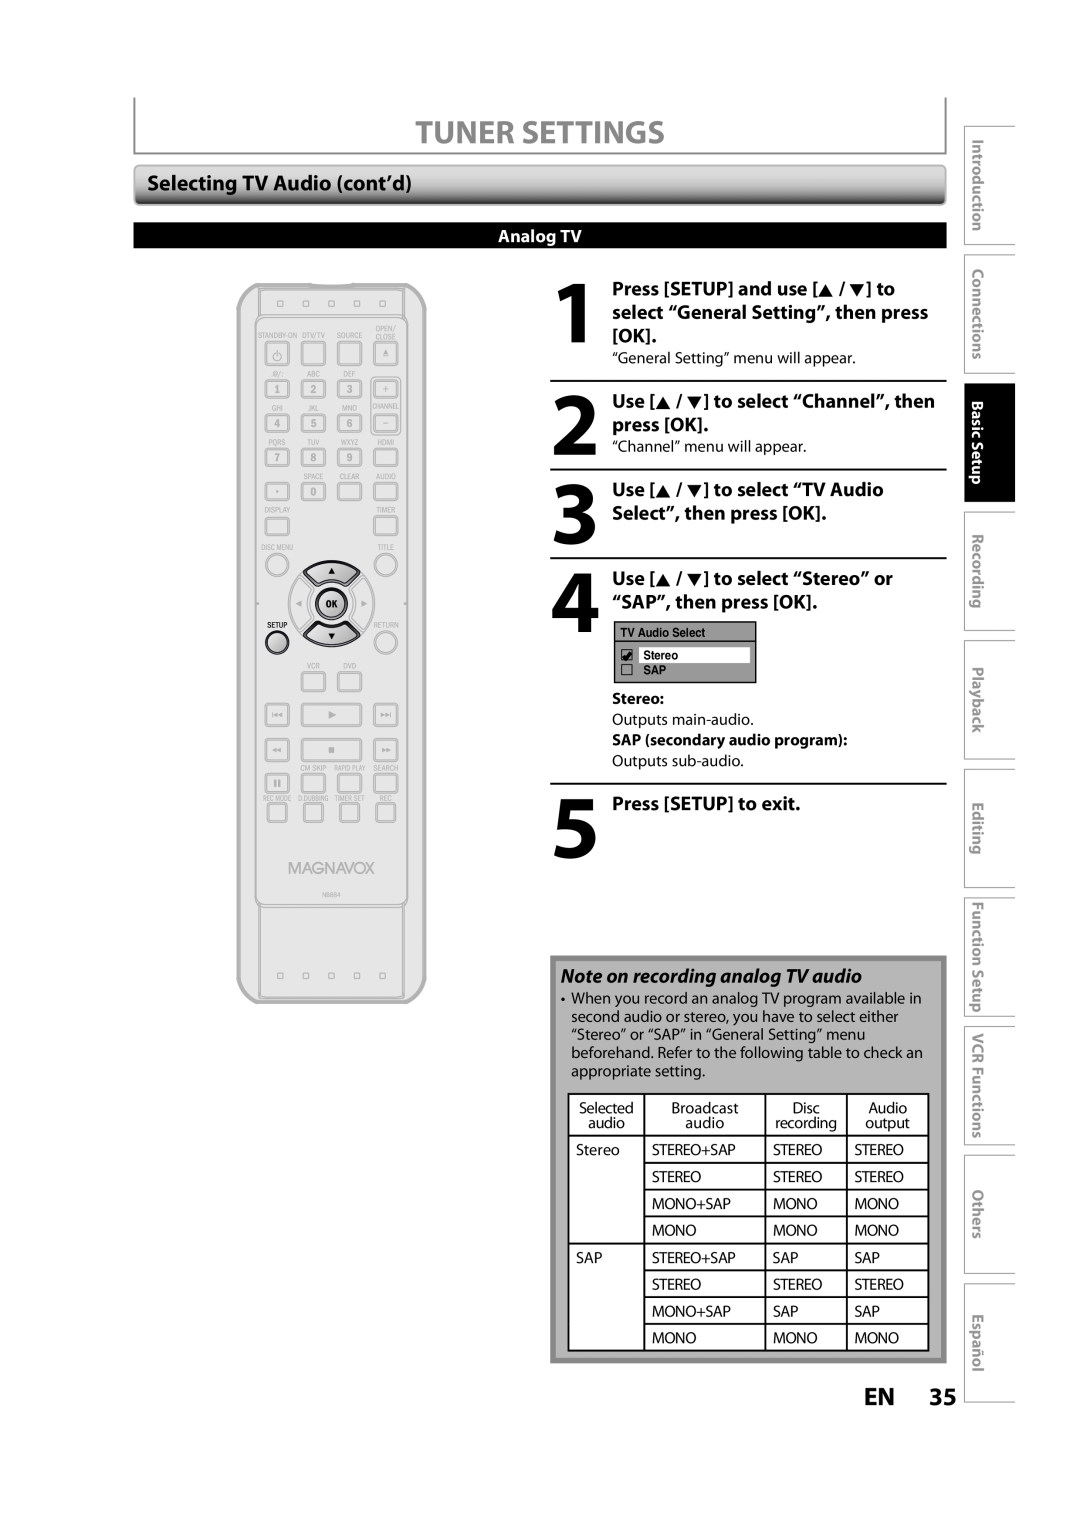 FUNAI ZV457MG9 A owner manual Selecting TV Audio cont’d, Tuner Settings, Analog TV, Español 